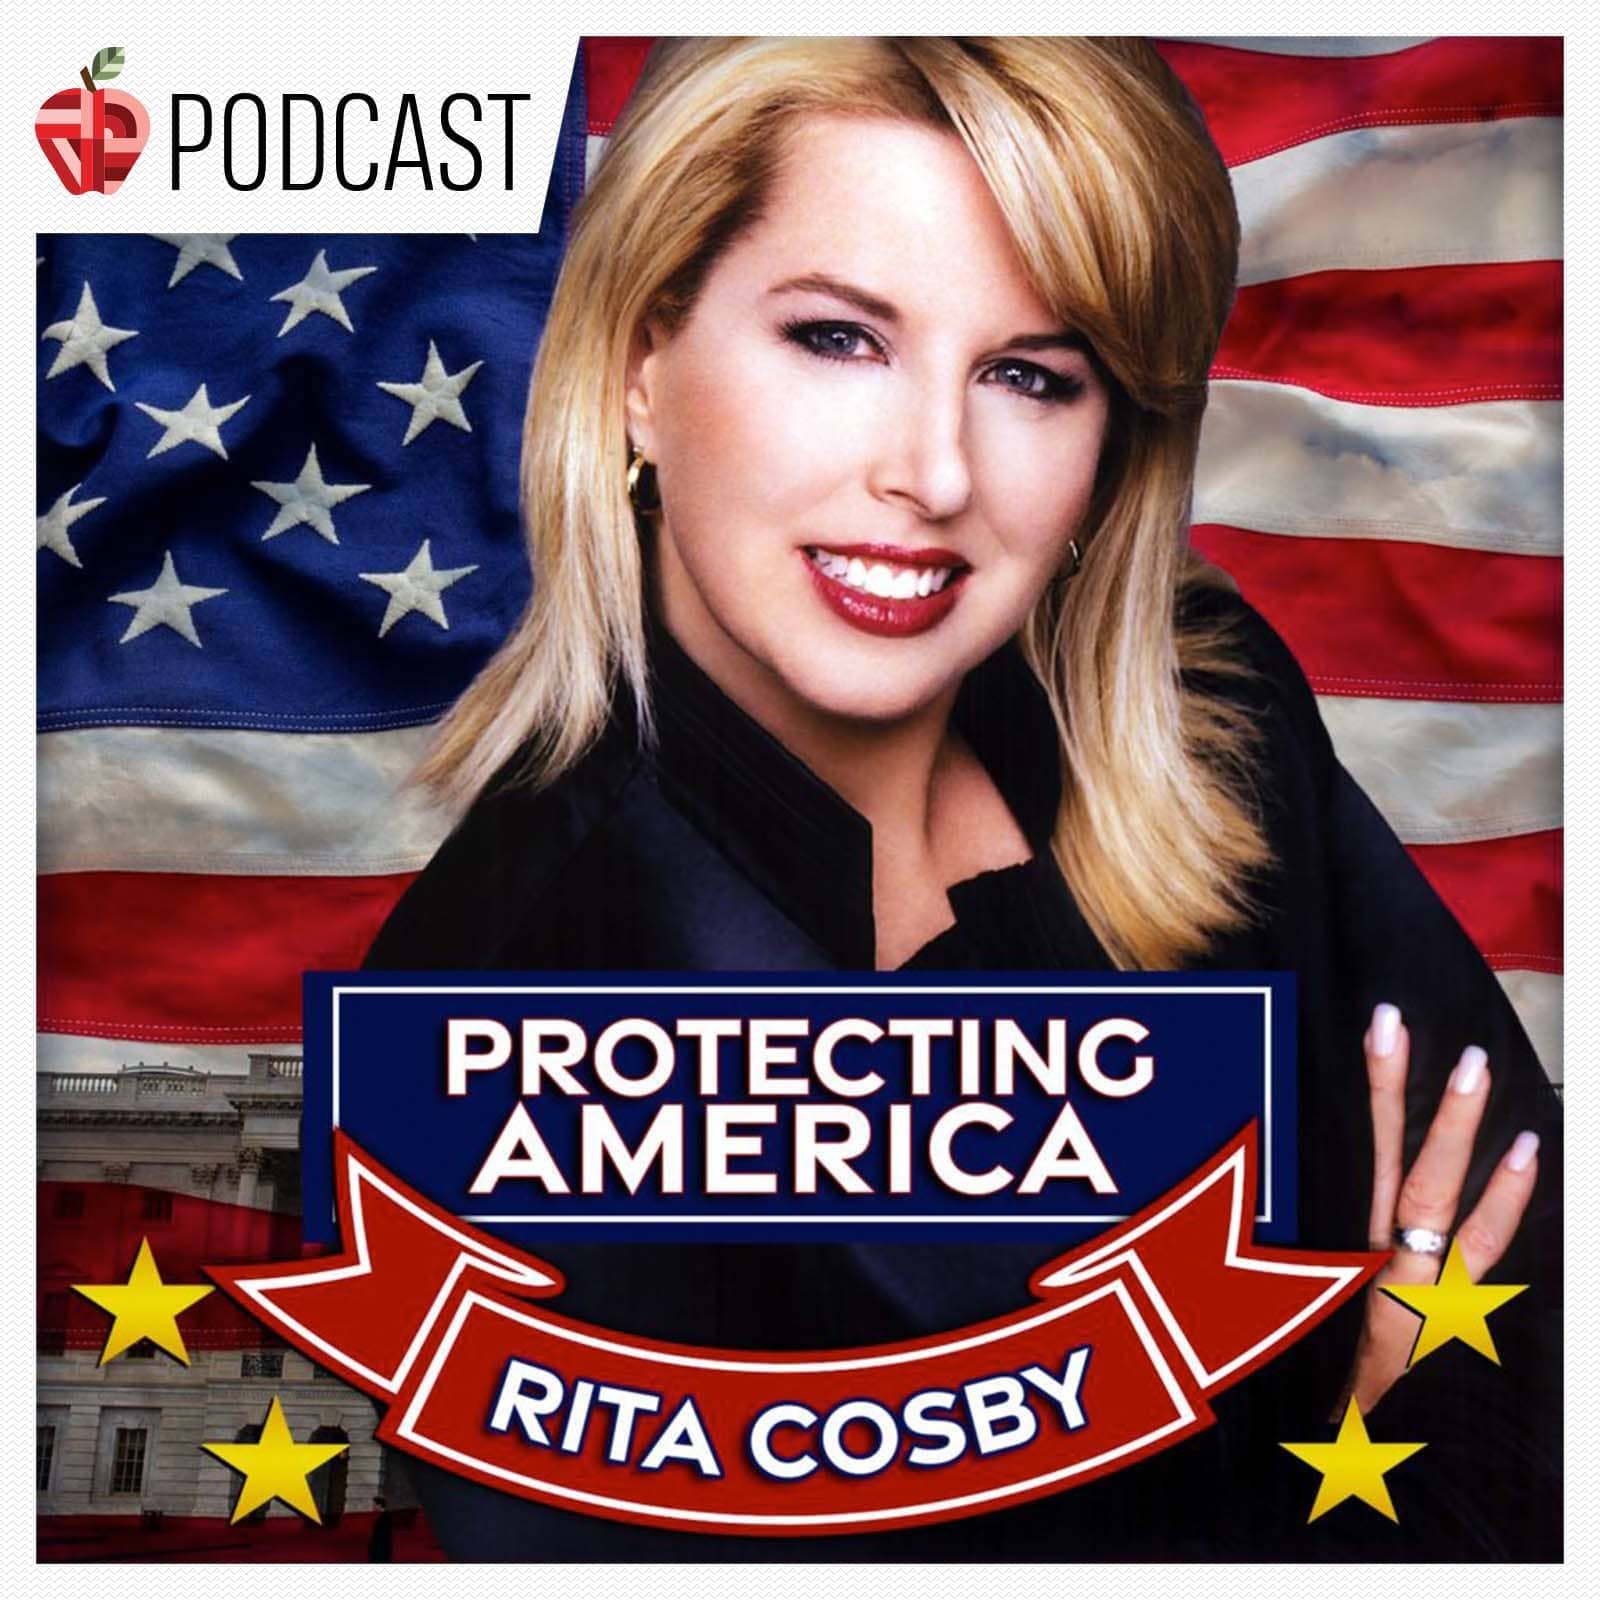 rita-cosby-protecting-america-correct-podcast-new-logo-53